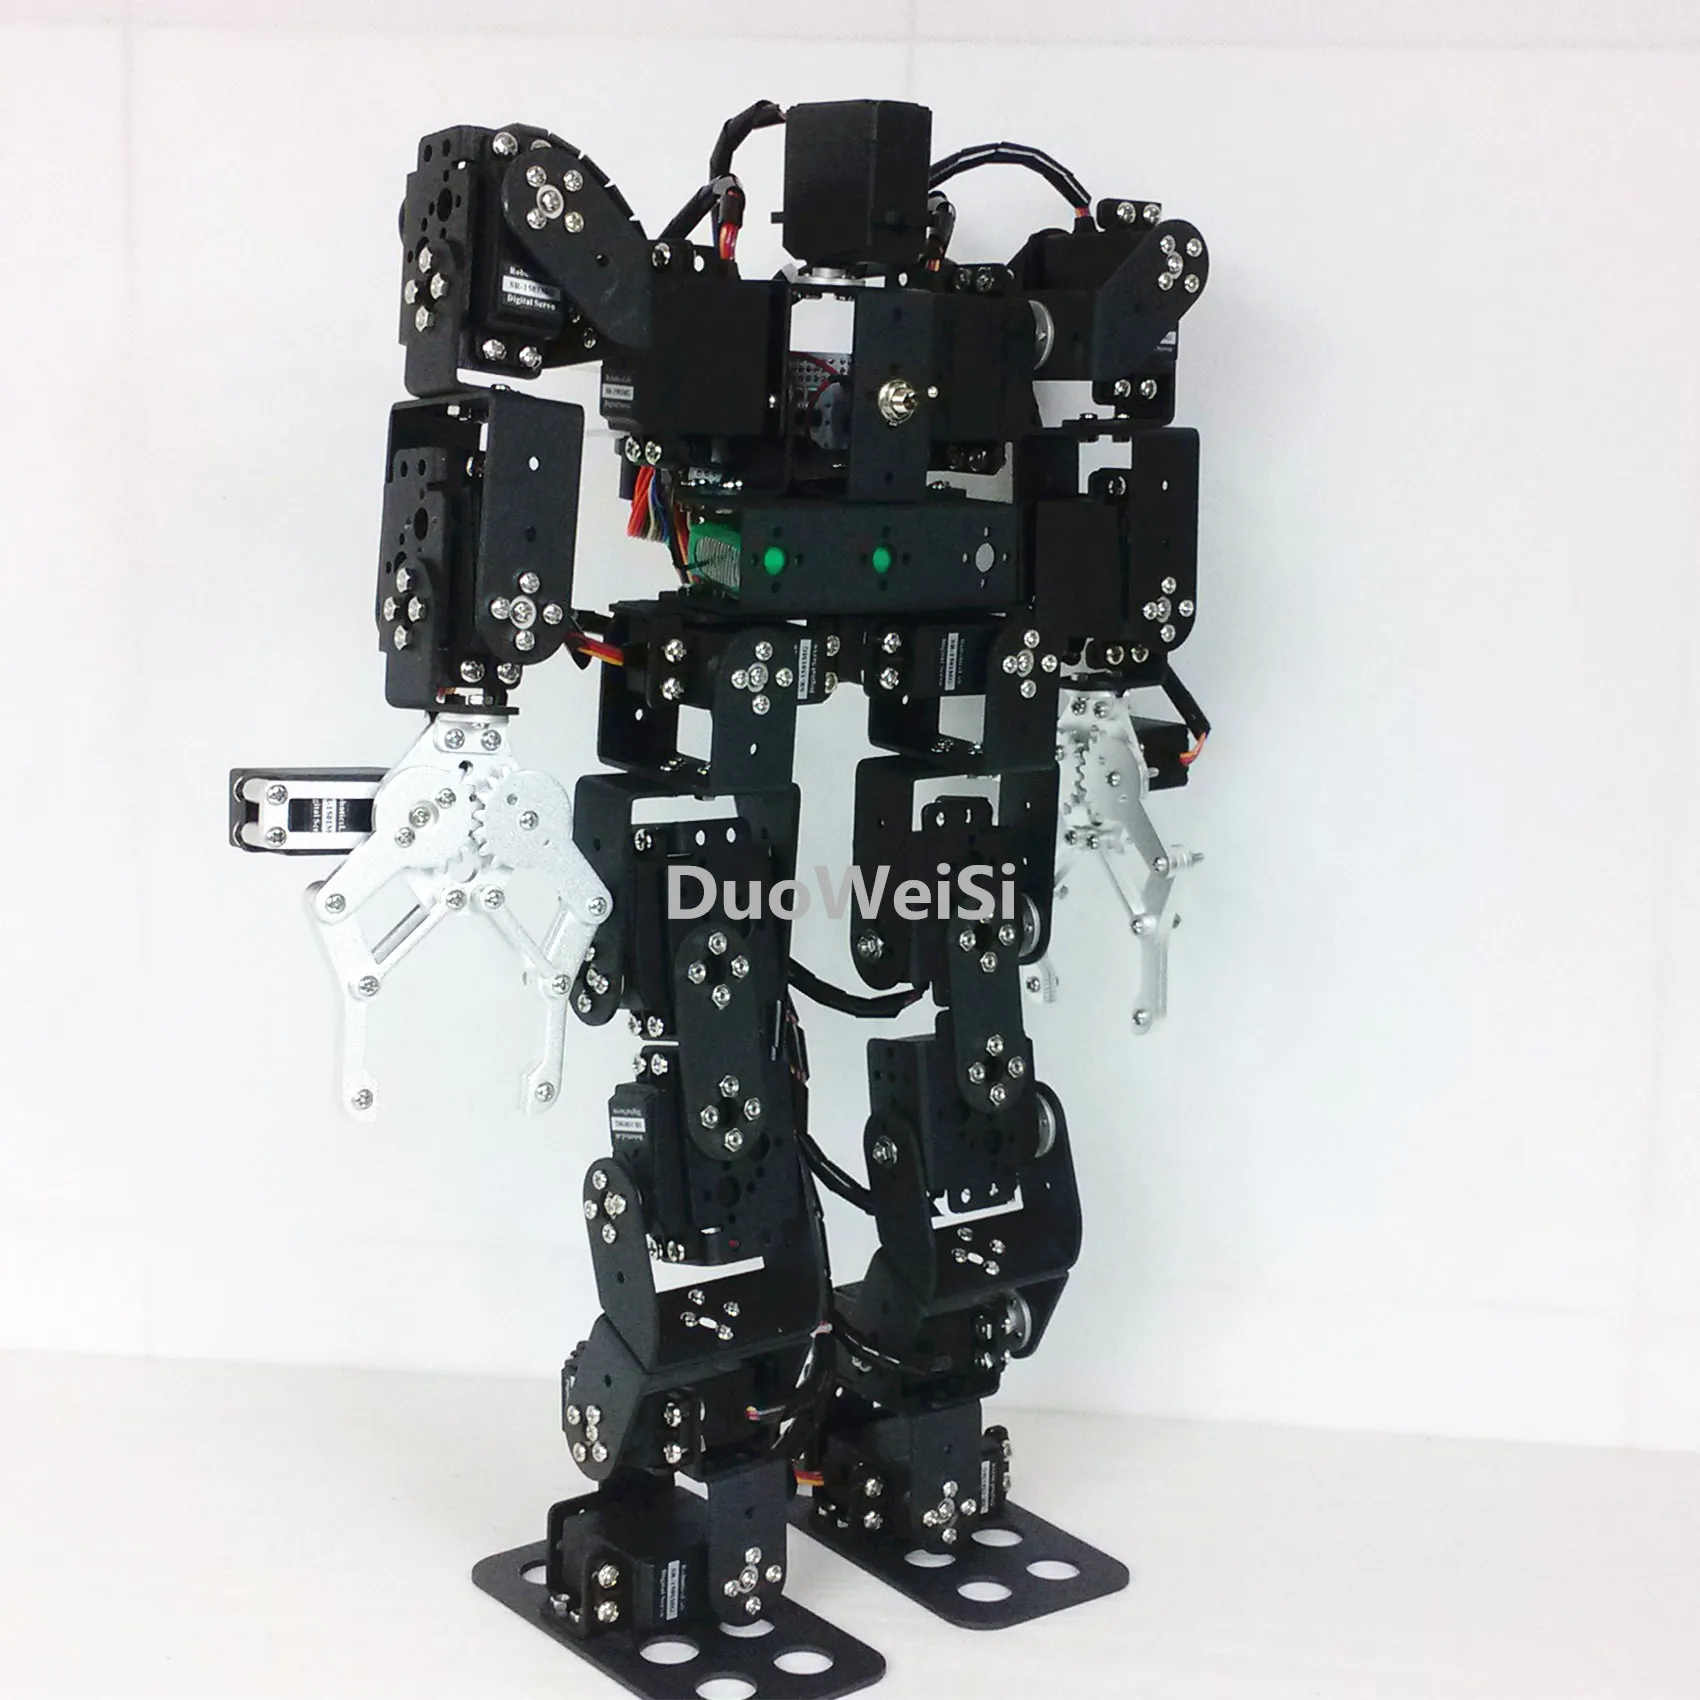 19 DOF humanoid dance robot / biped walking robot / for teaching kit / matching accessories 19 degrees of freedom robot